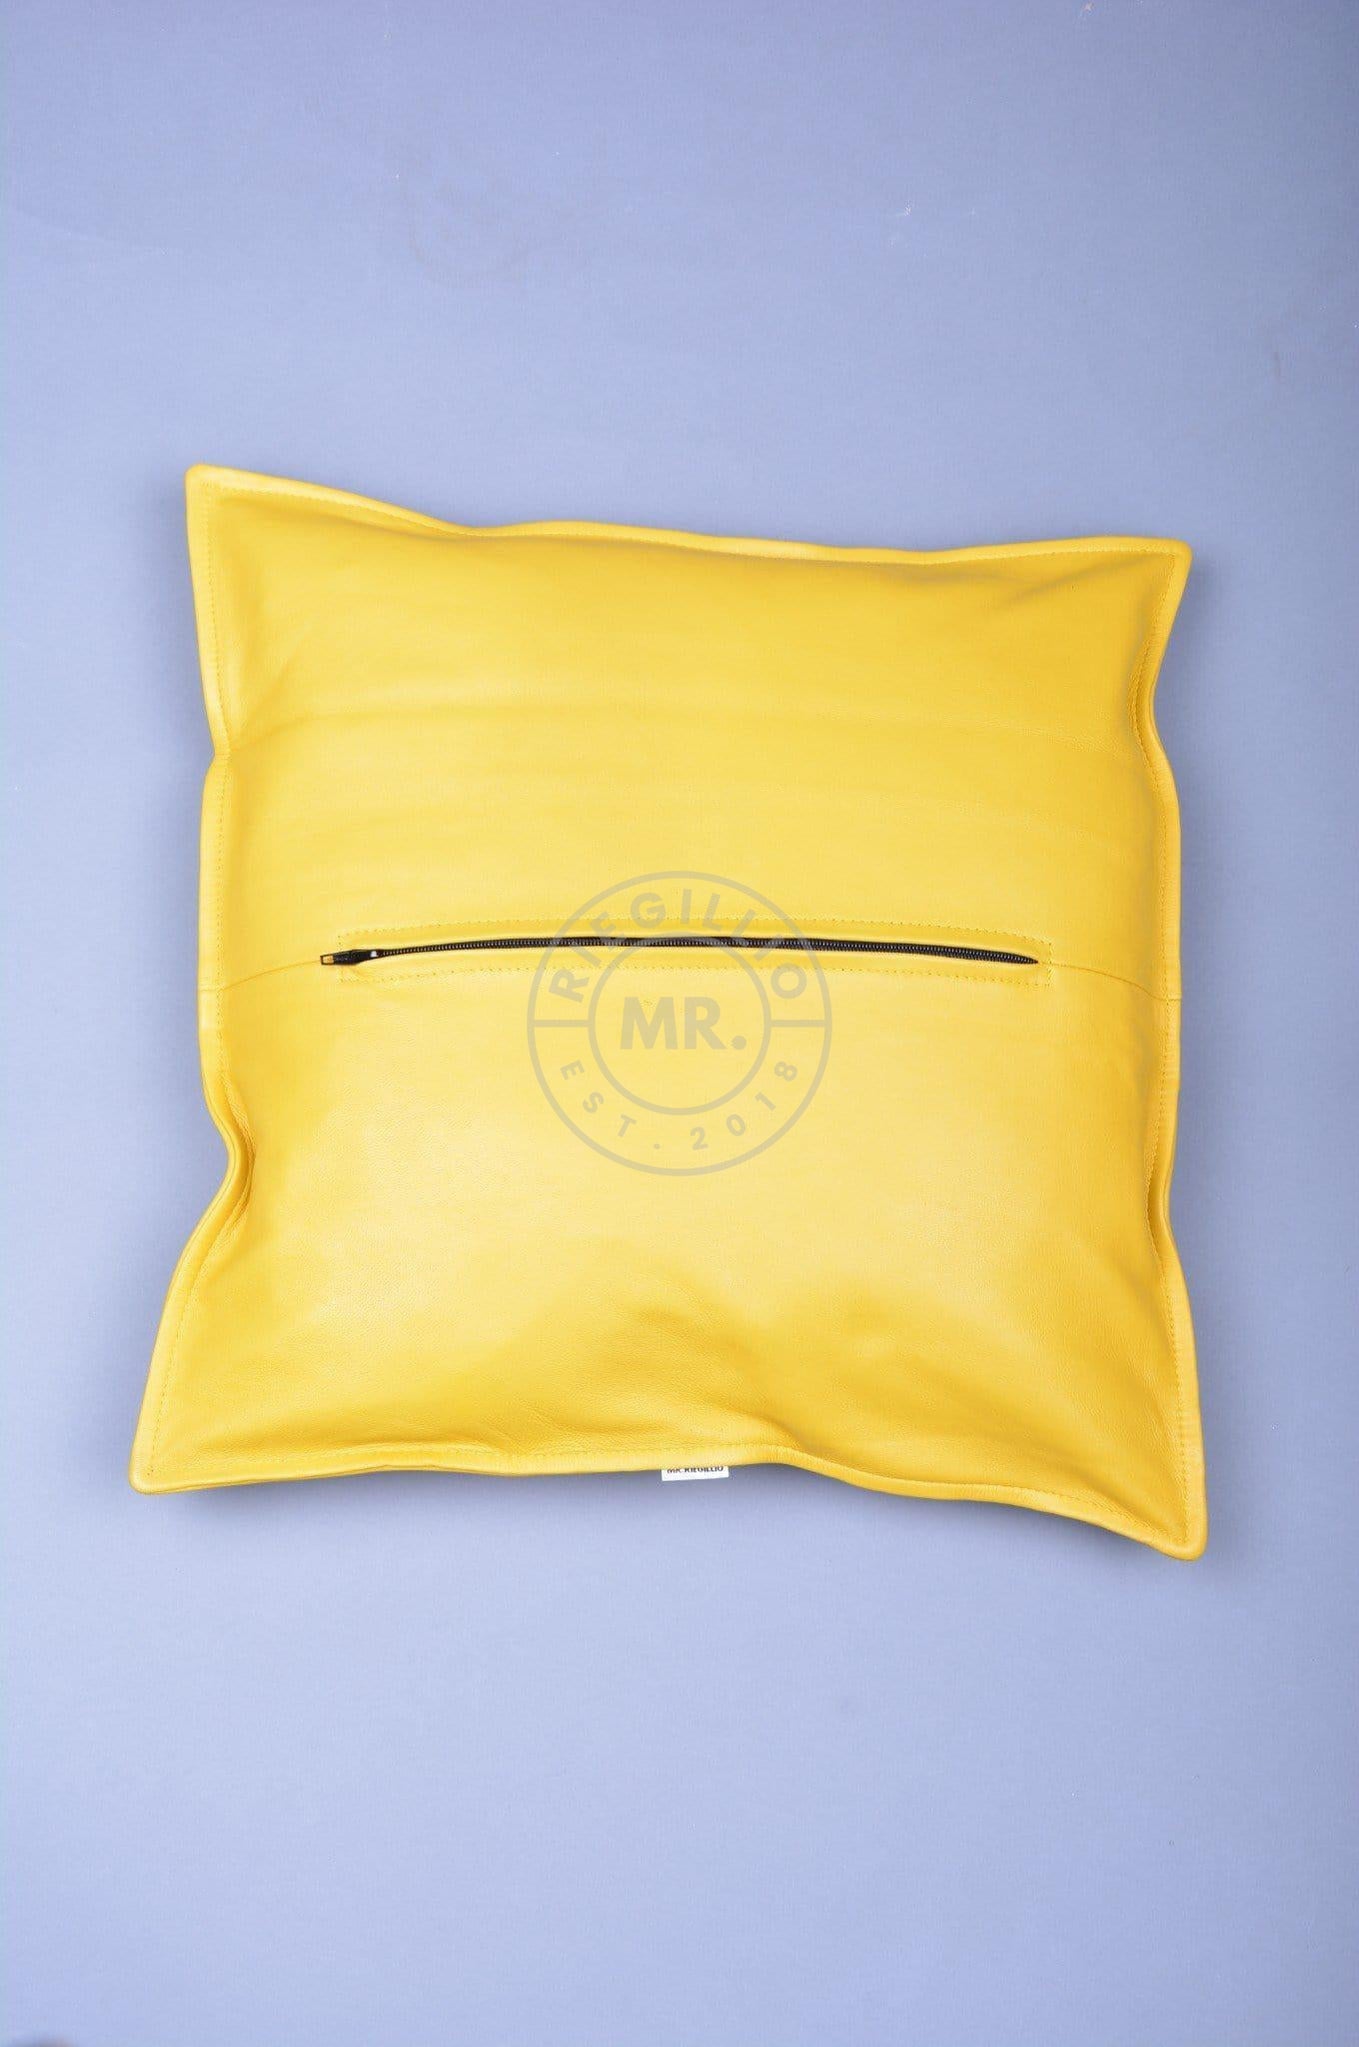 Yellow Leather Pillow at MR. Riegillio